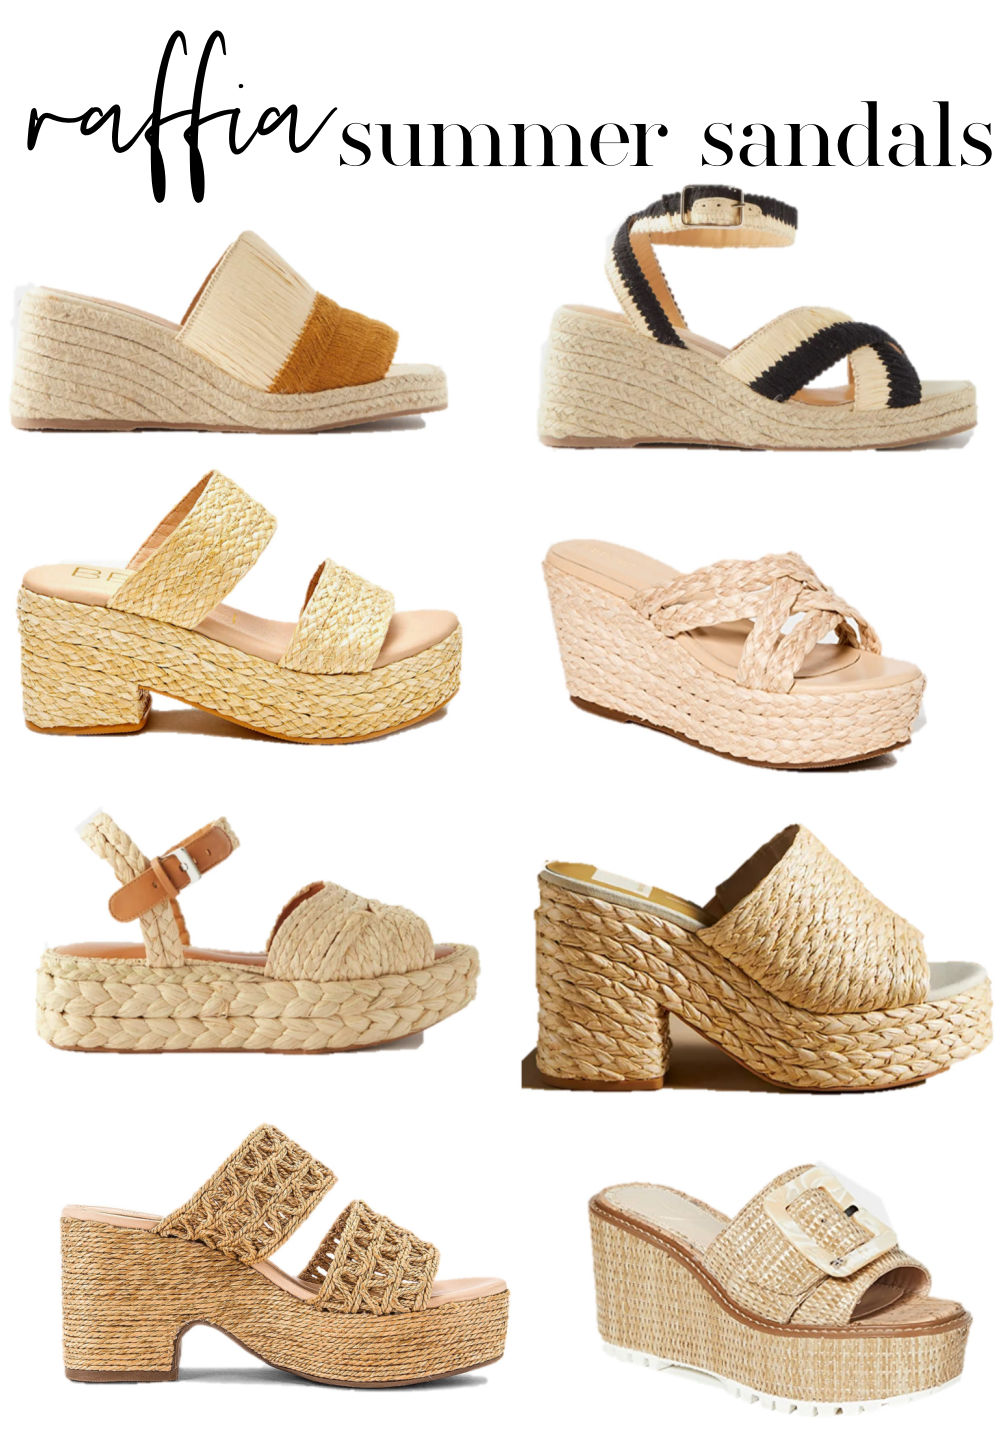 raffia summer sandals, platform raffia sandals, espadrilles